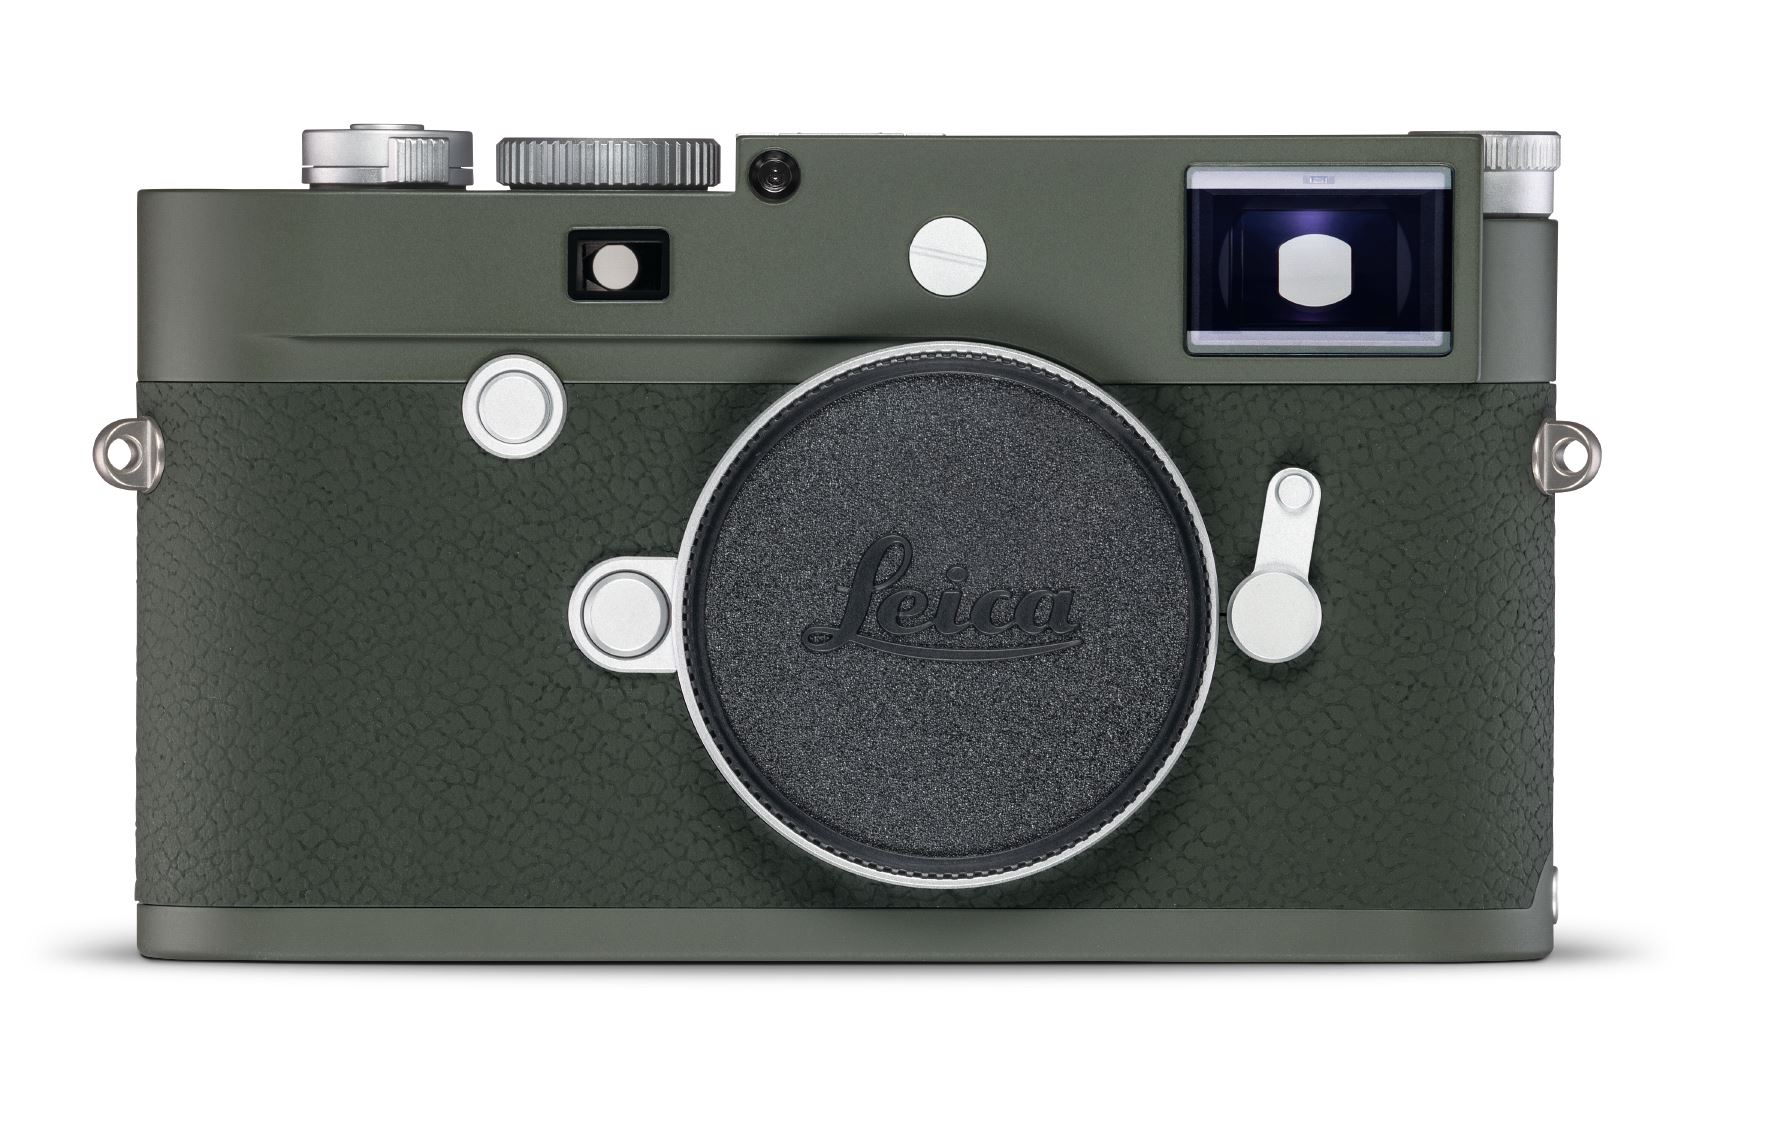 Đang tải Leica-M10-P-Safari-limited-edition-camera7.jpg…